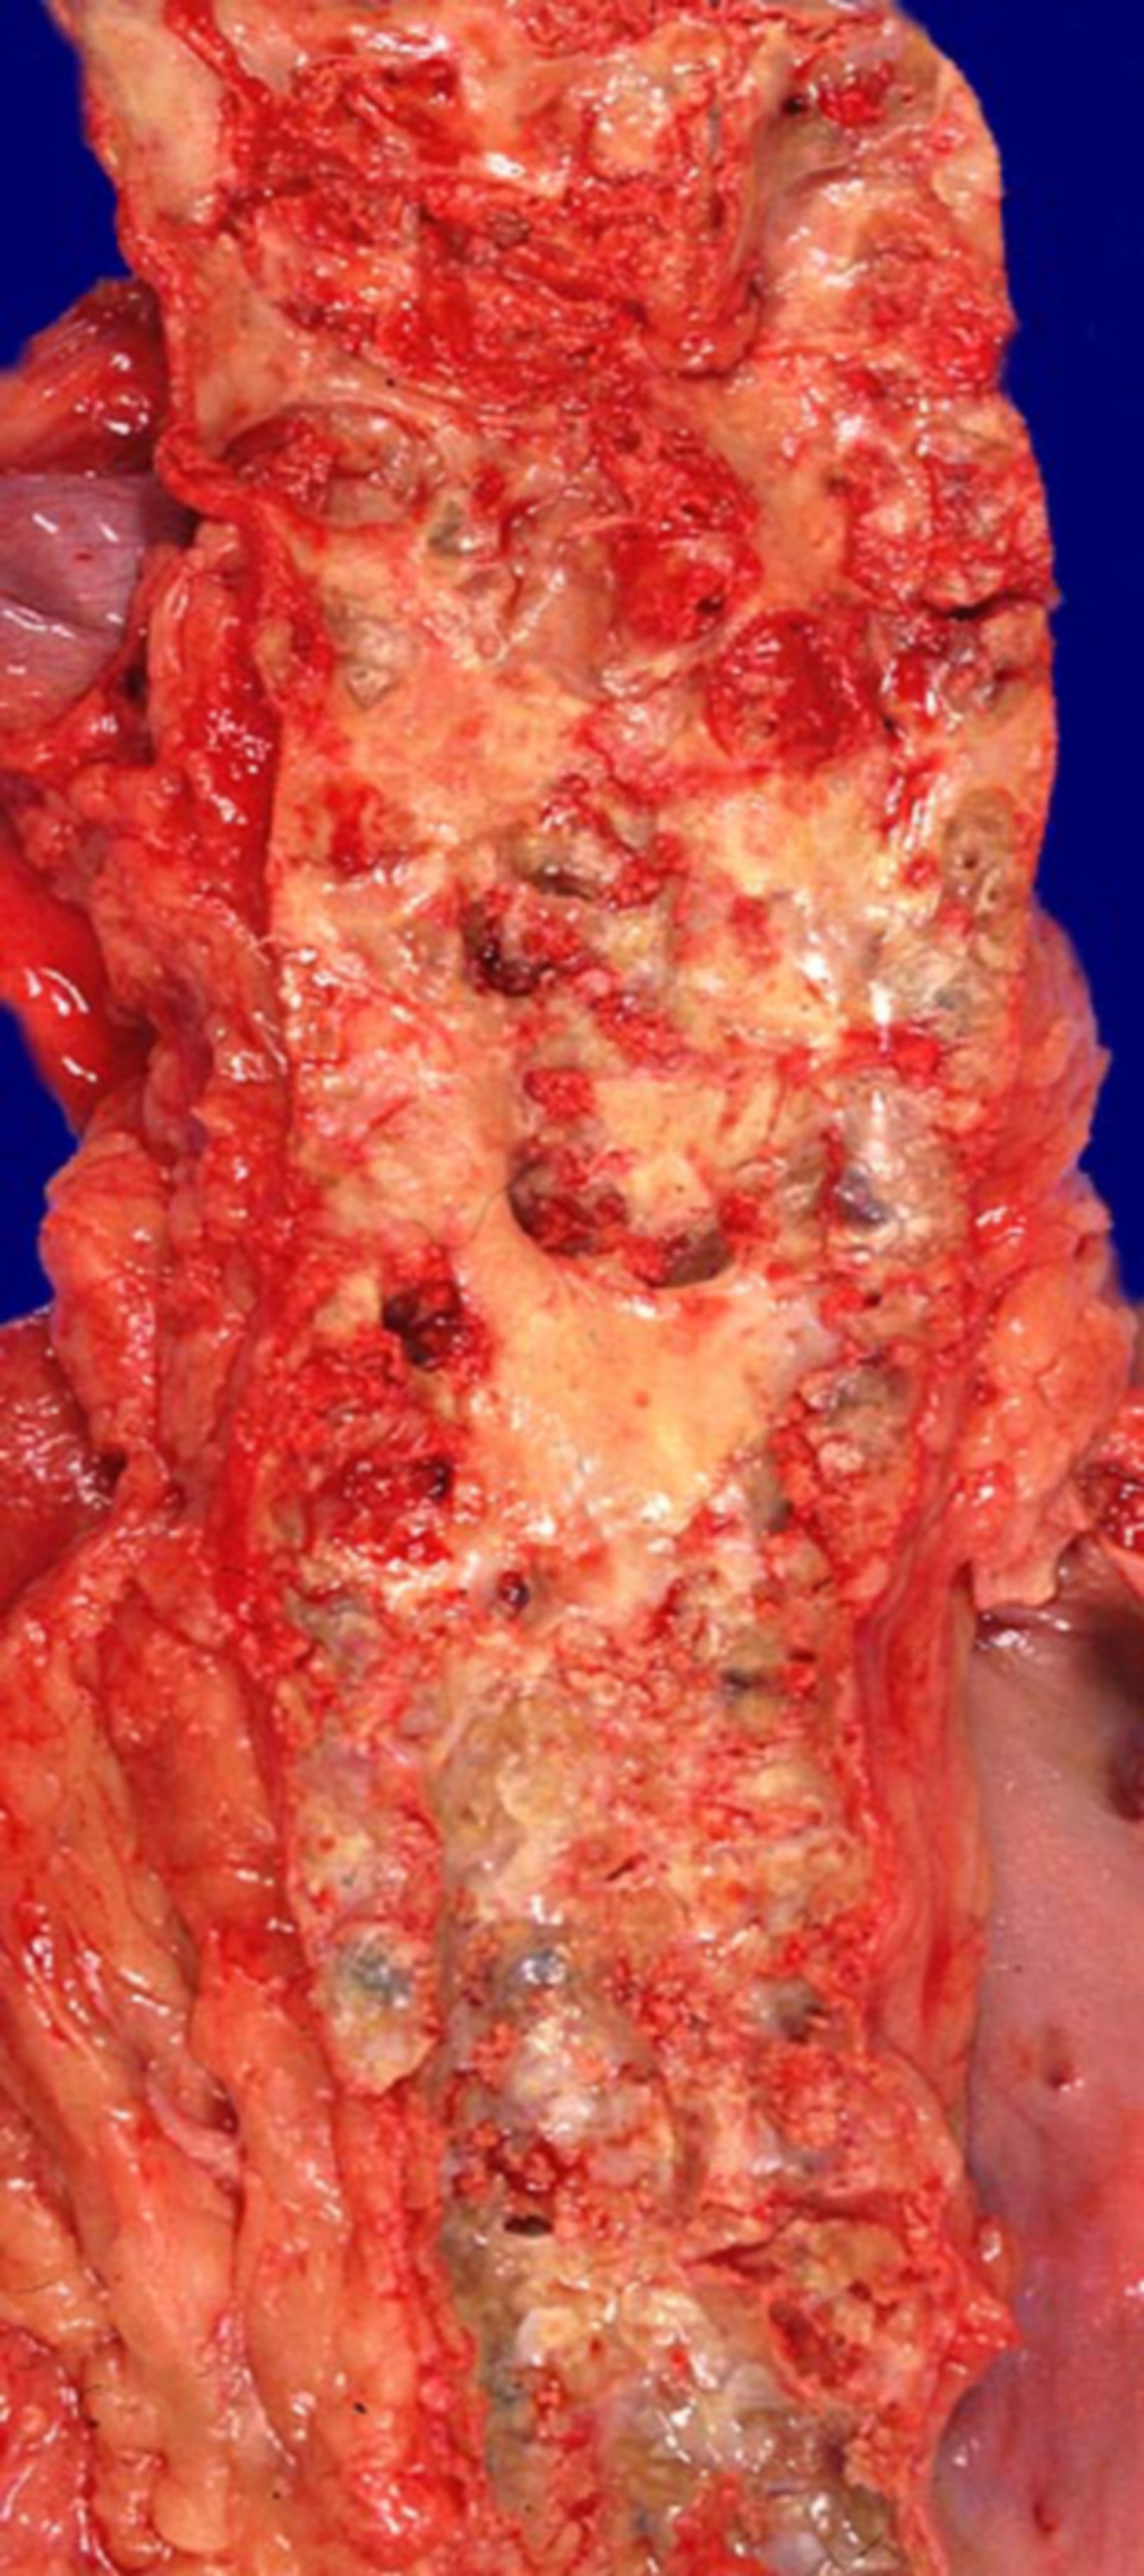 Abdominal aorta, Severe atherosclerosis